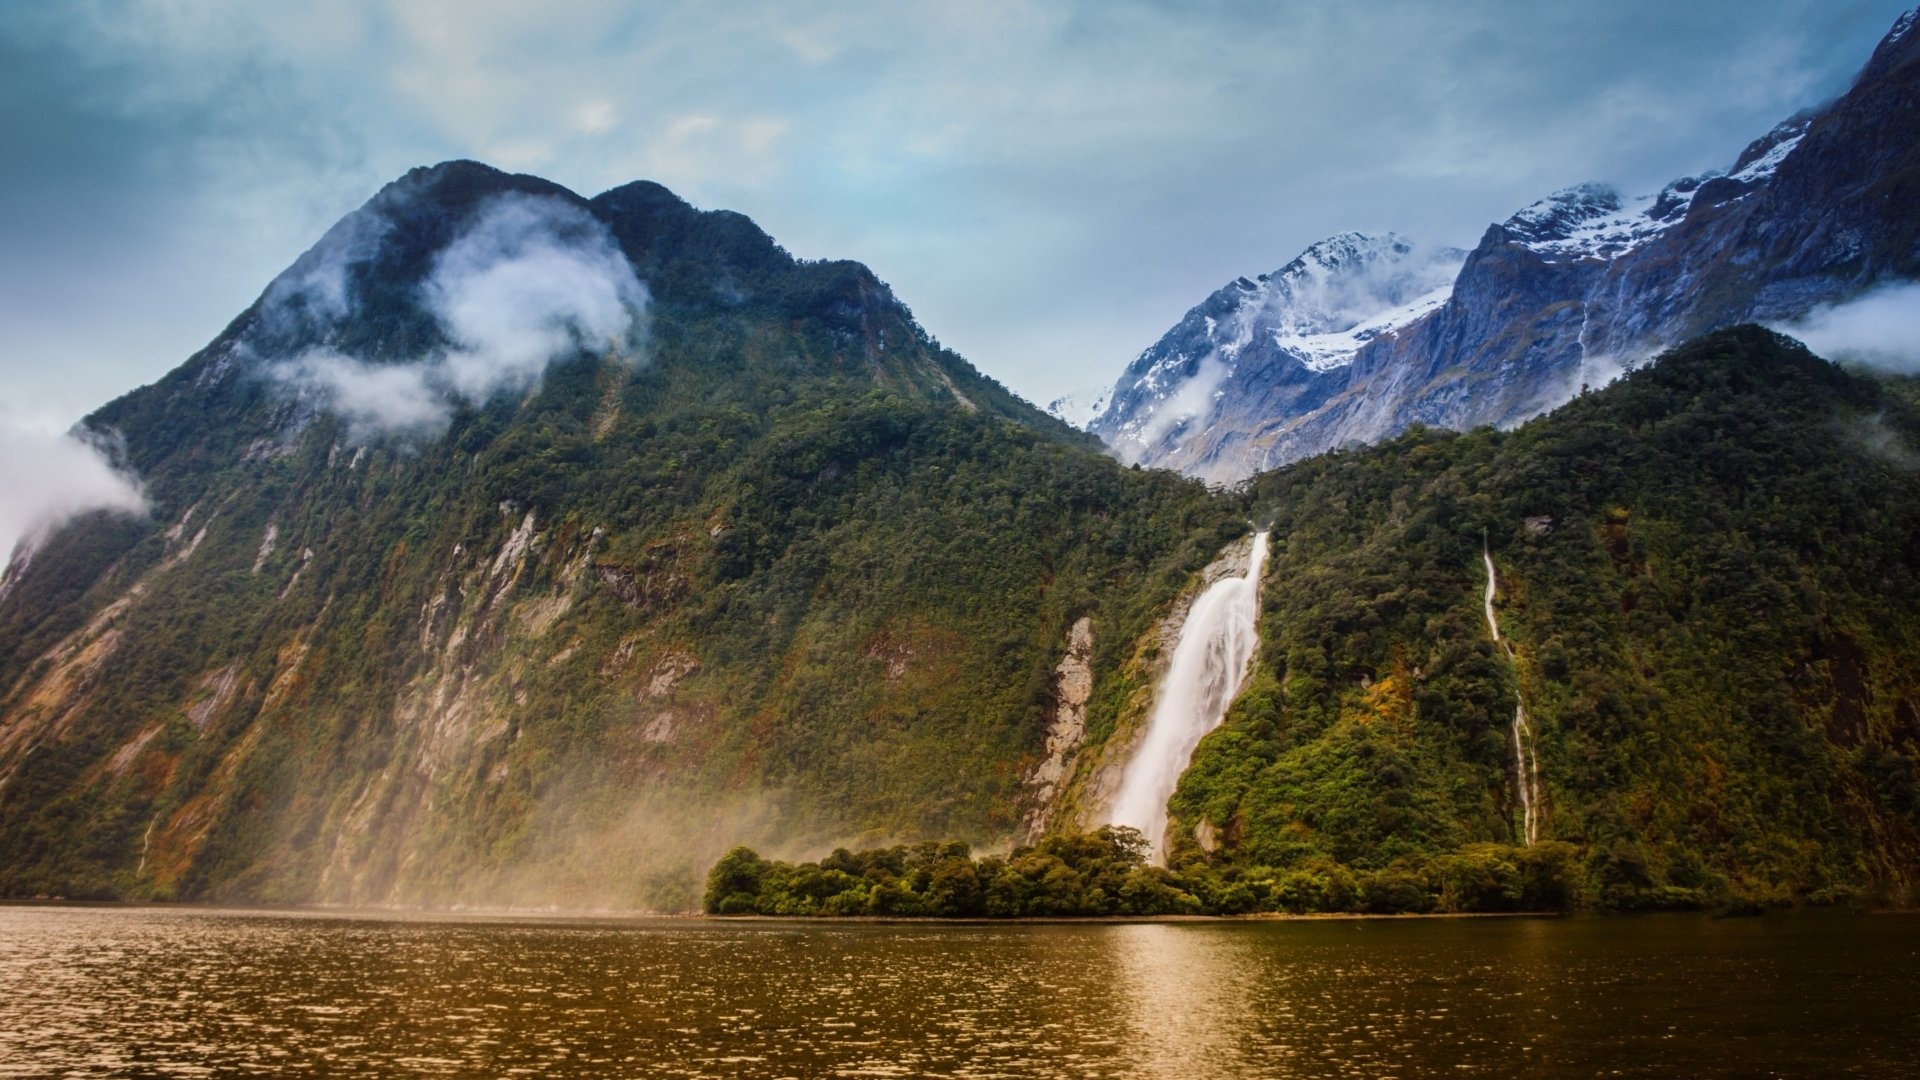 Fiordland National Park, Breathtaking falls, Nature's wallpaper, Stunning backdrop, 1920x1080 Full HD Desktop